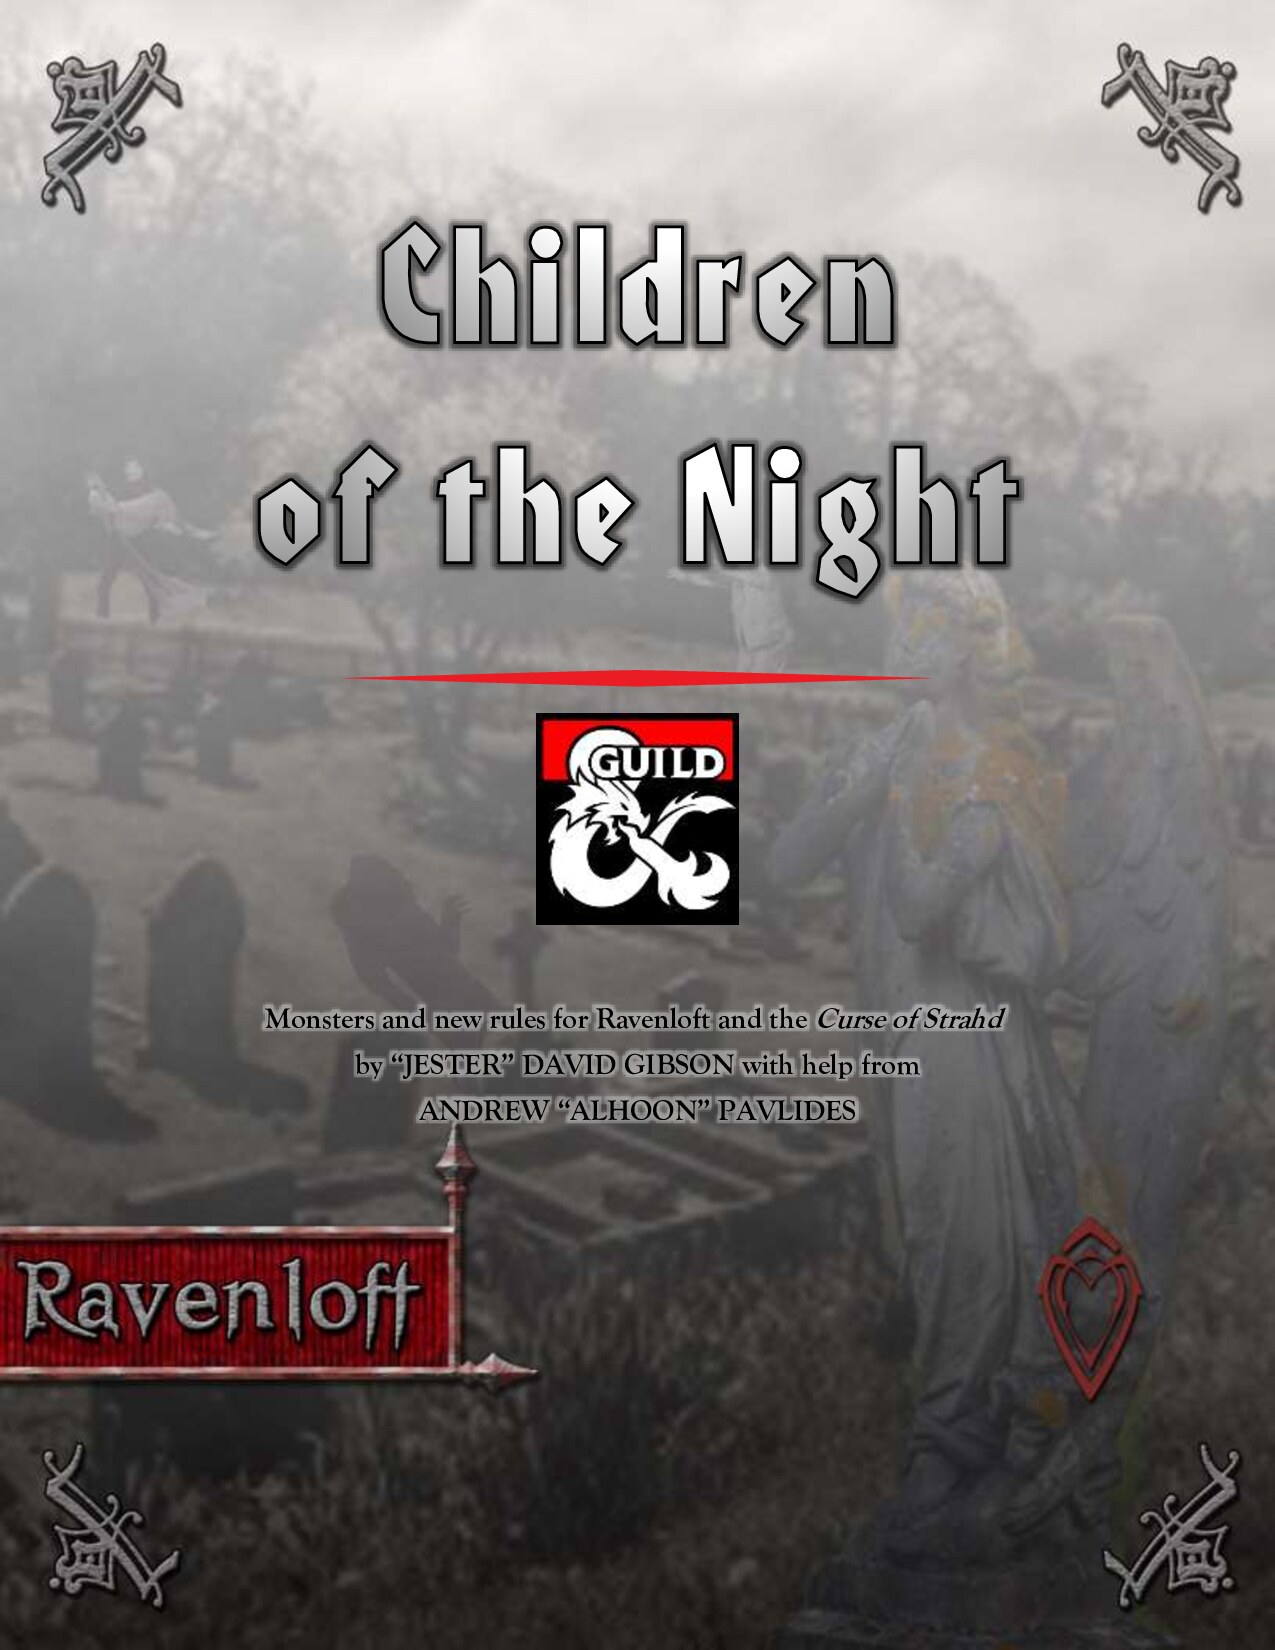 Fraternity of Shadows - Ravenloft - Children of the Night